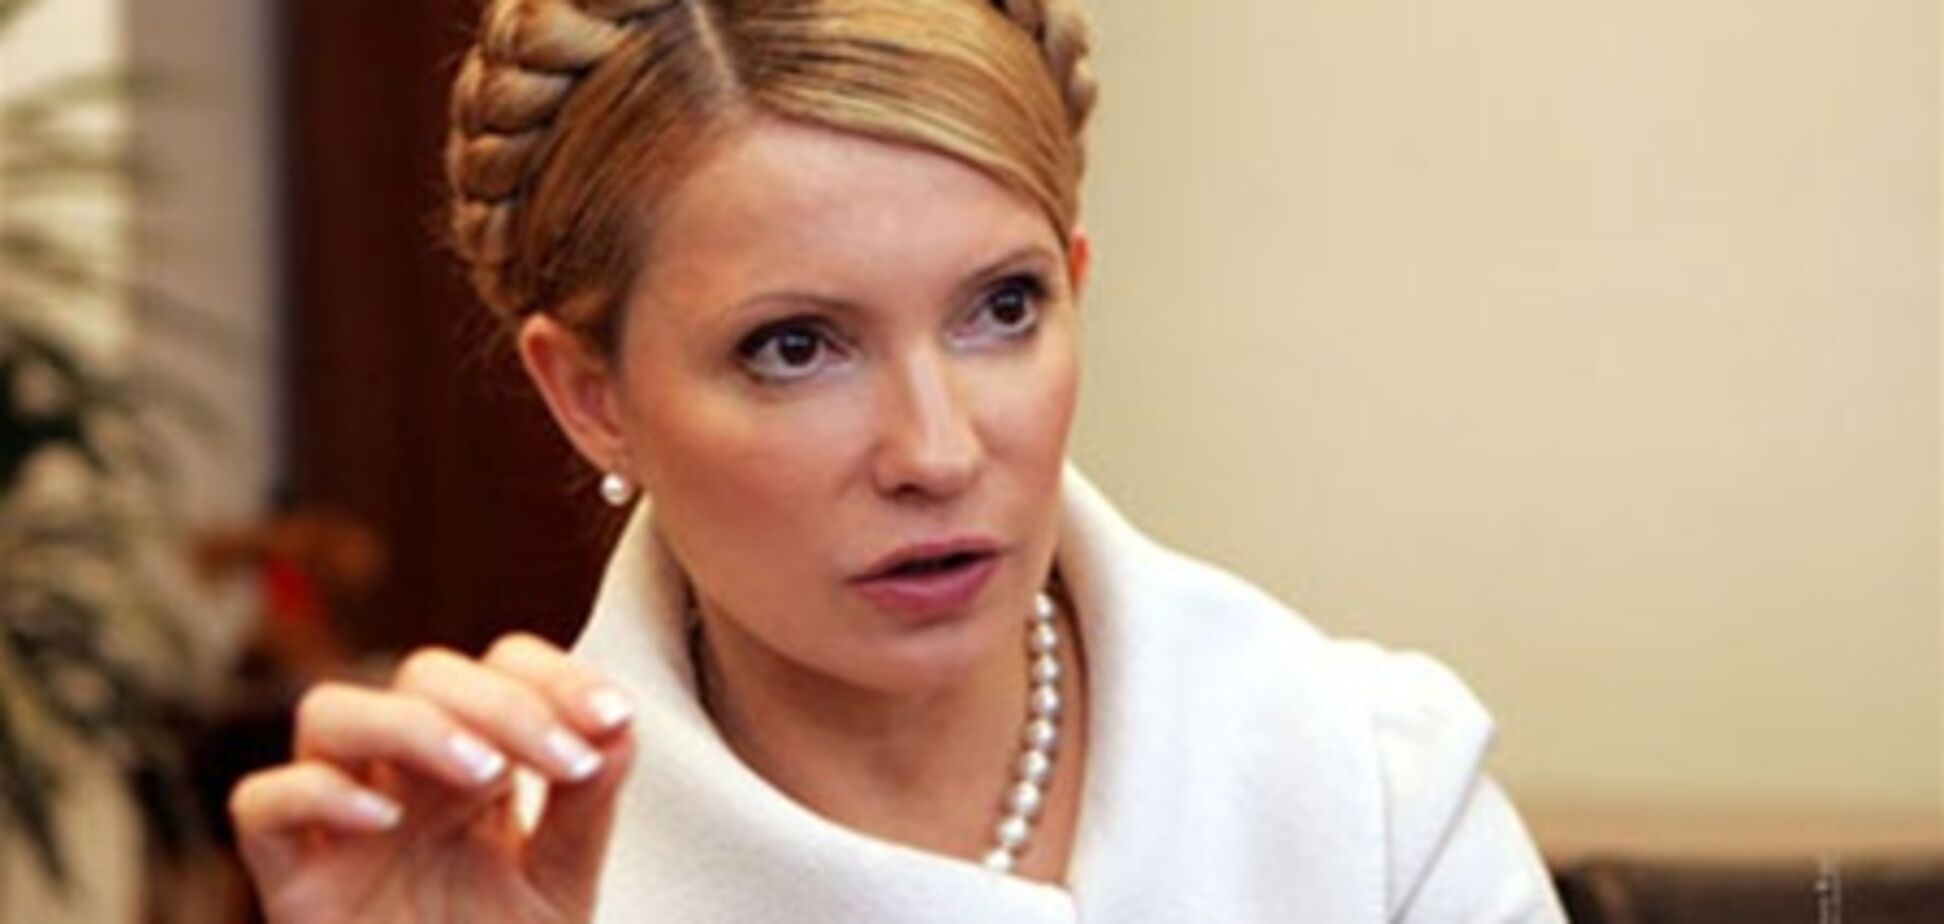 Тимошенко вышла из Генпрокуратуры